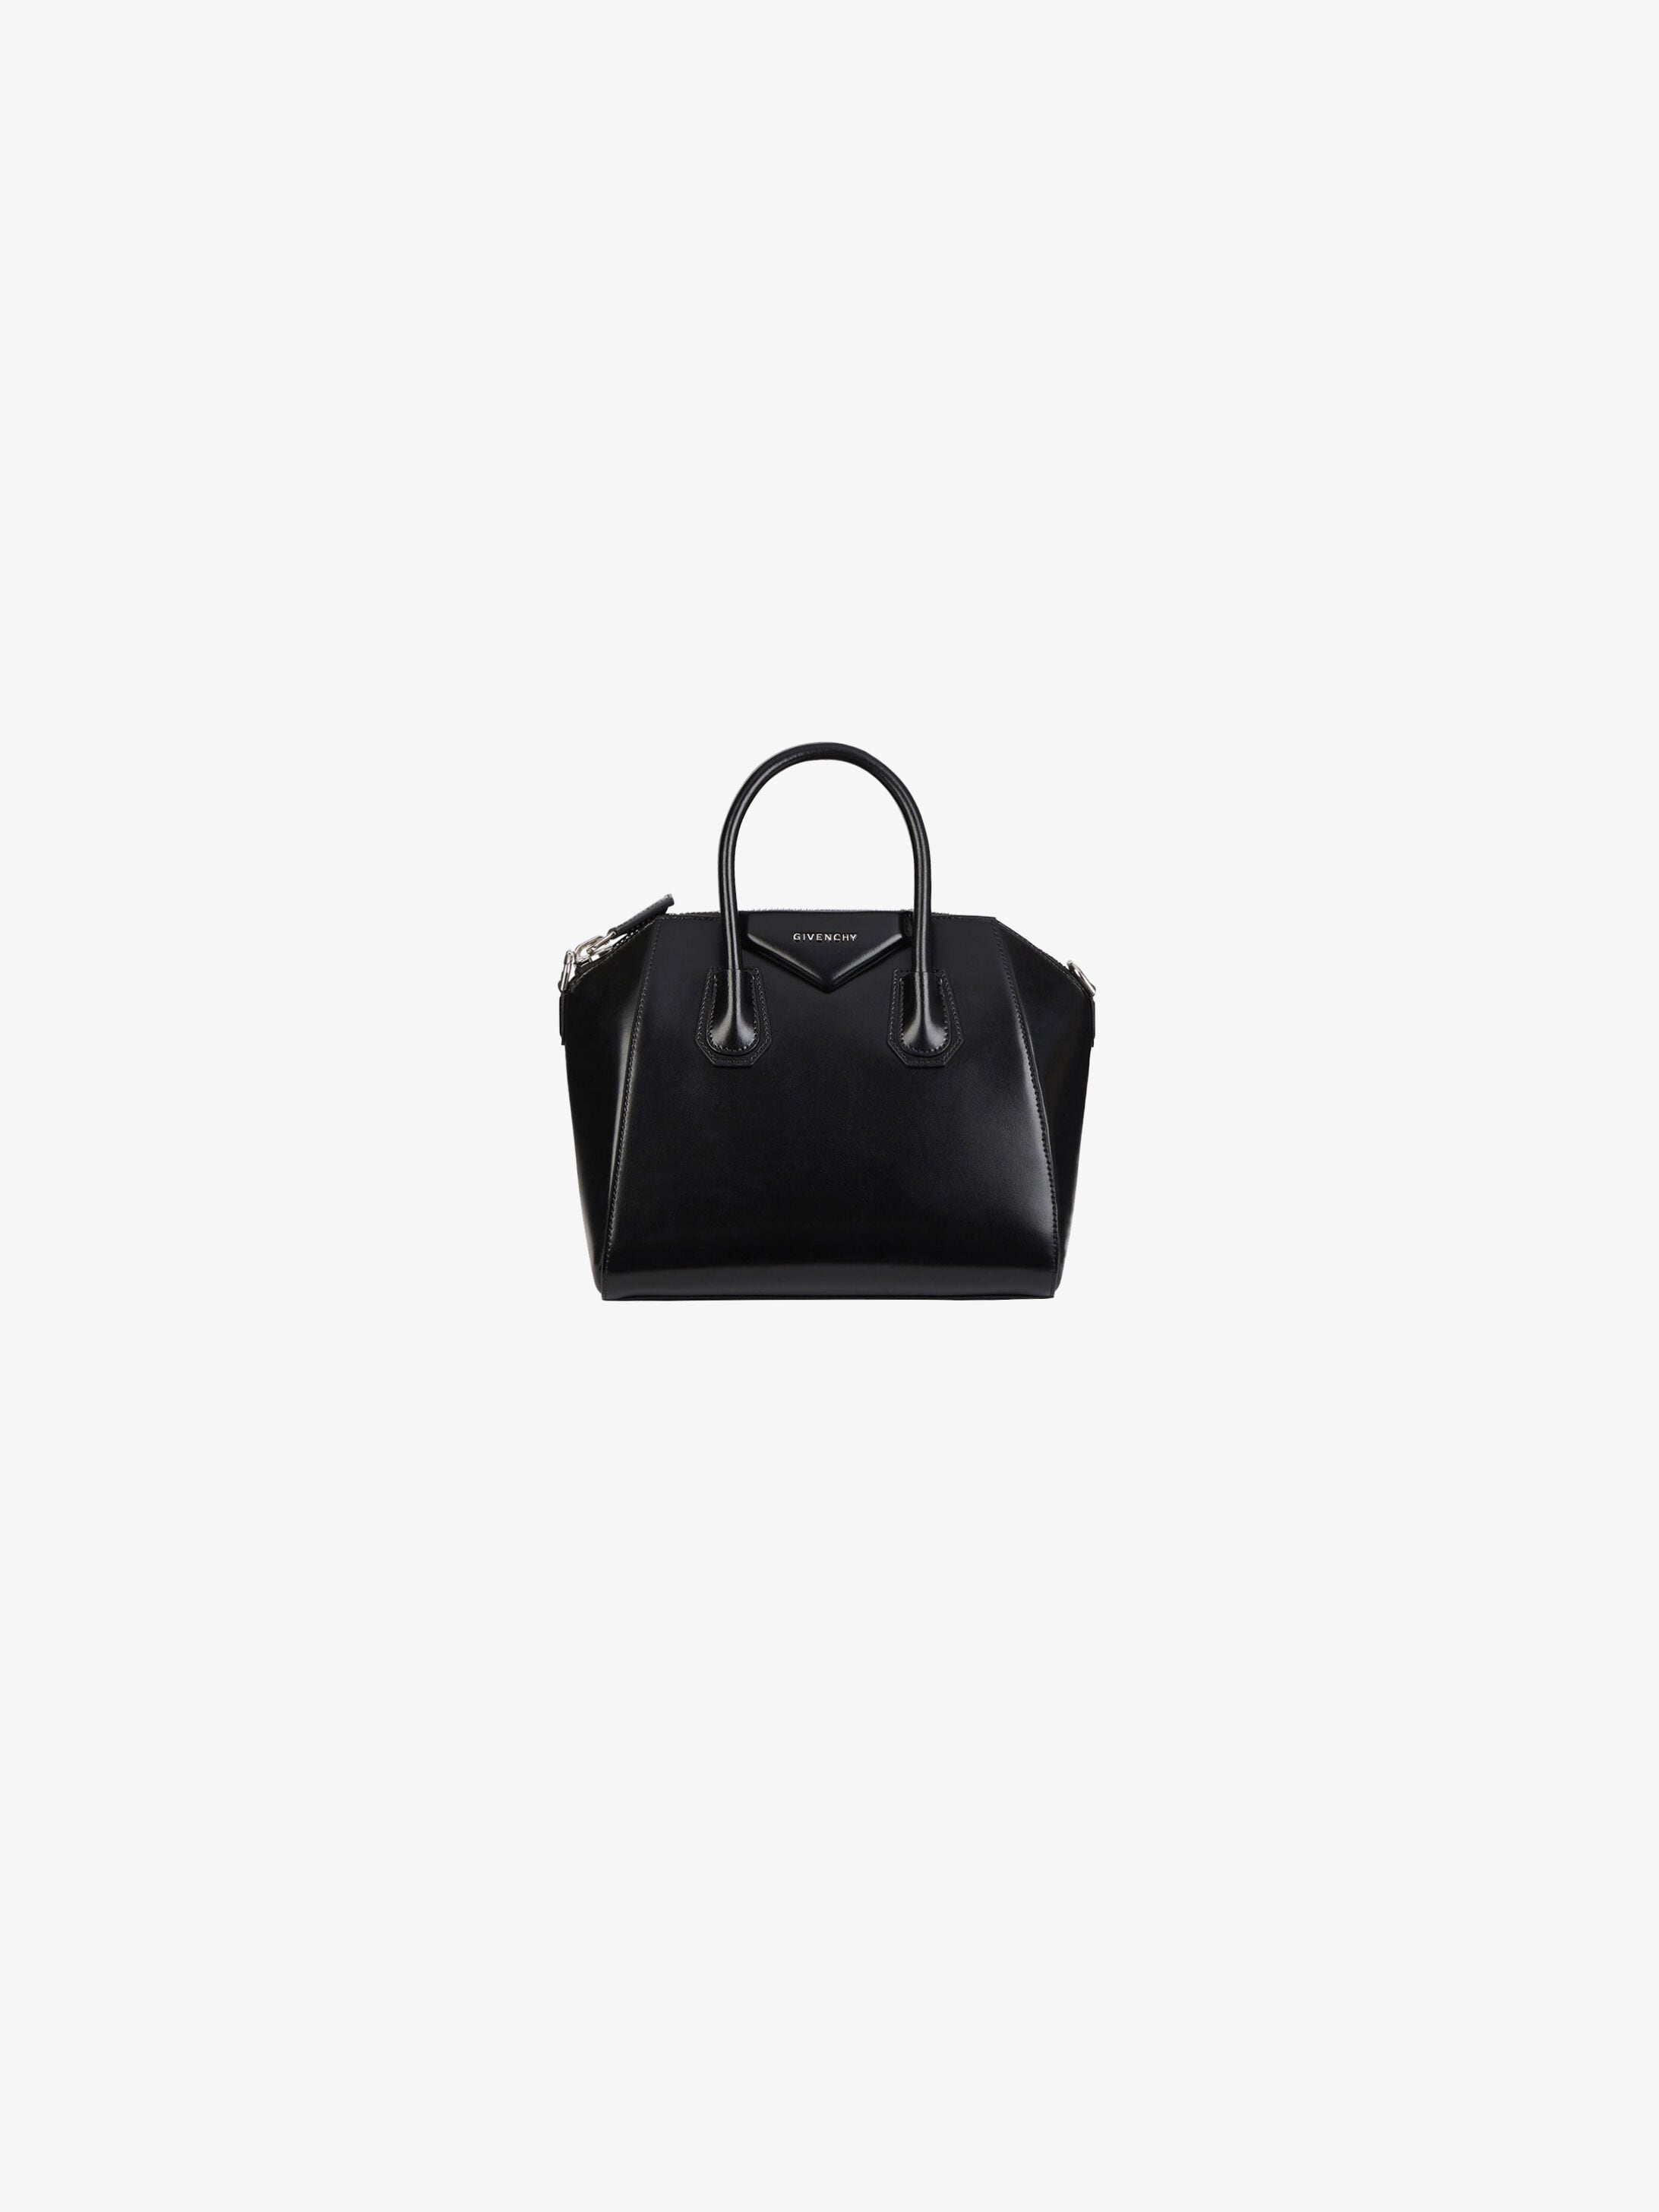 Givenchy Mini Antigona bag | GIVENCHY Paris